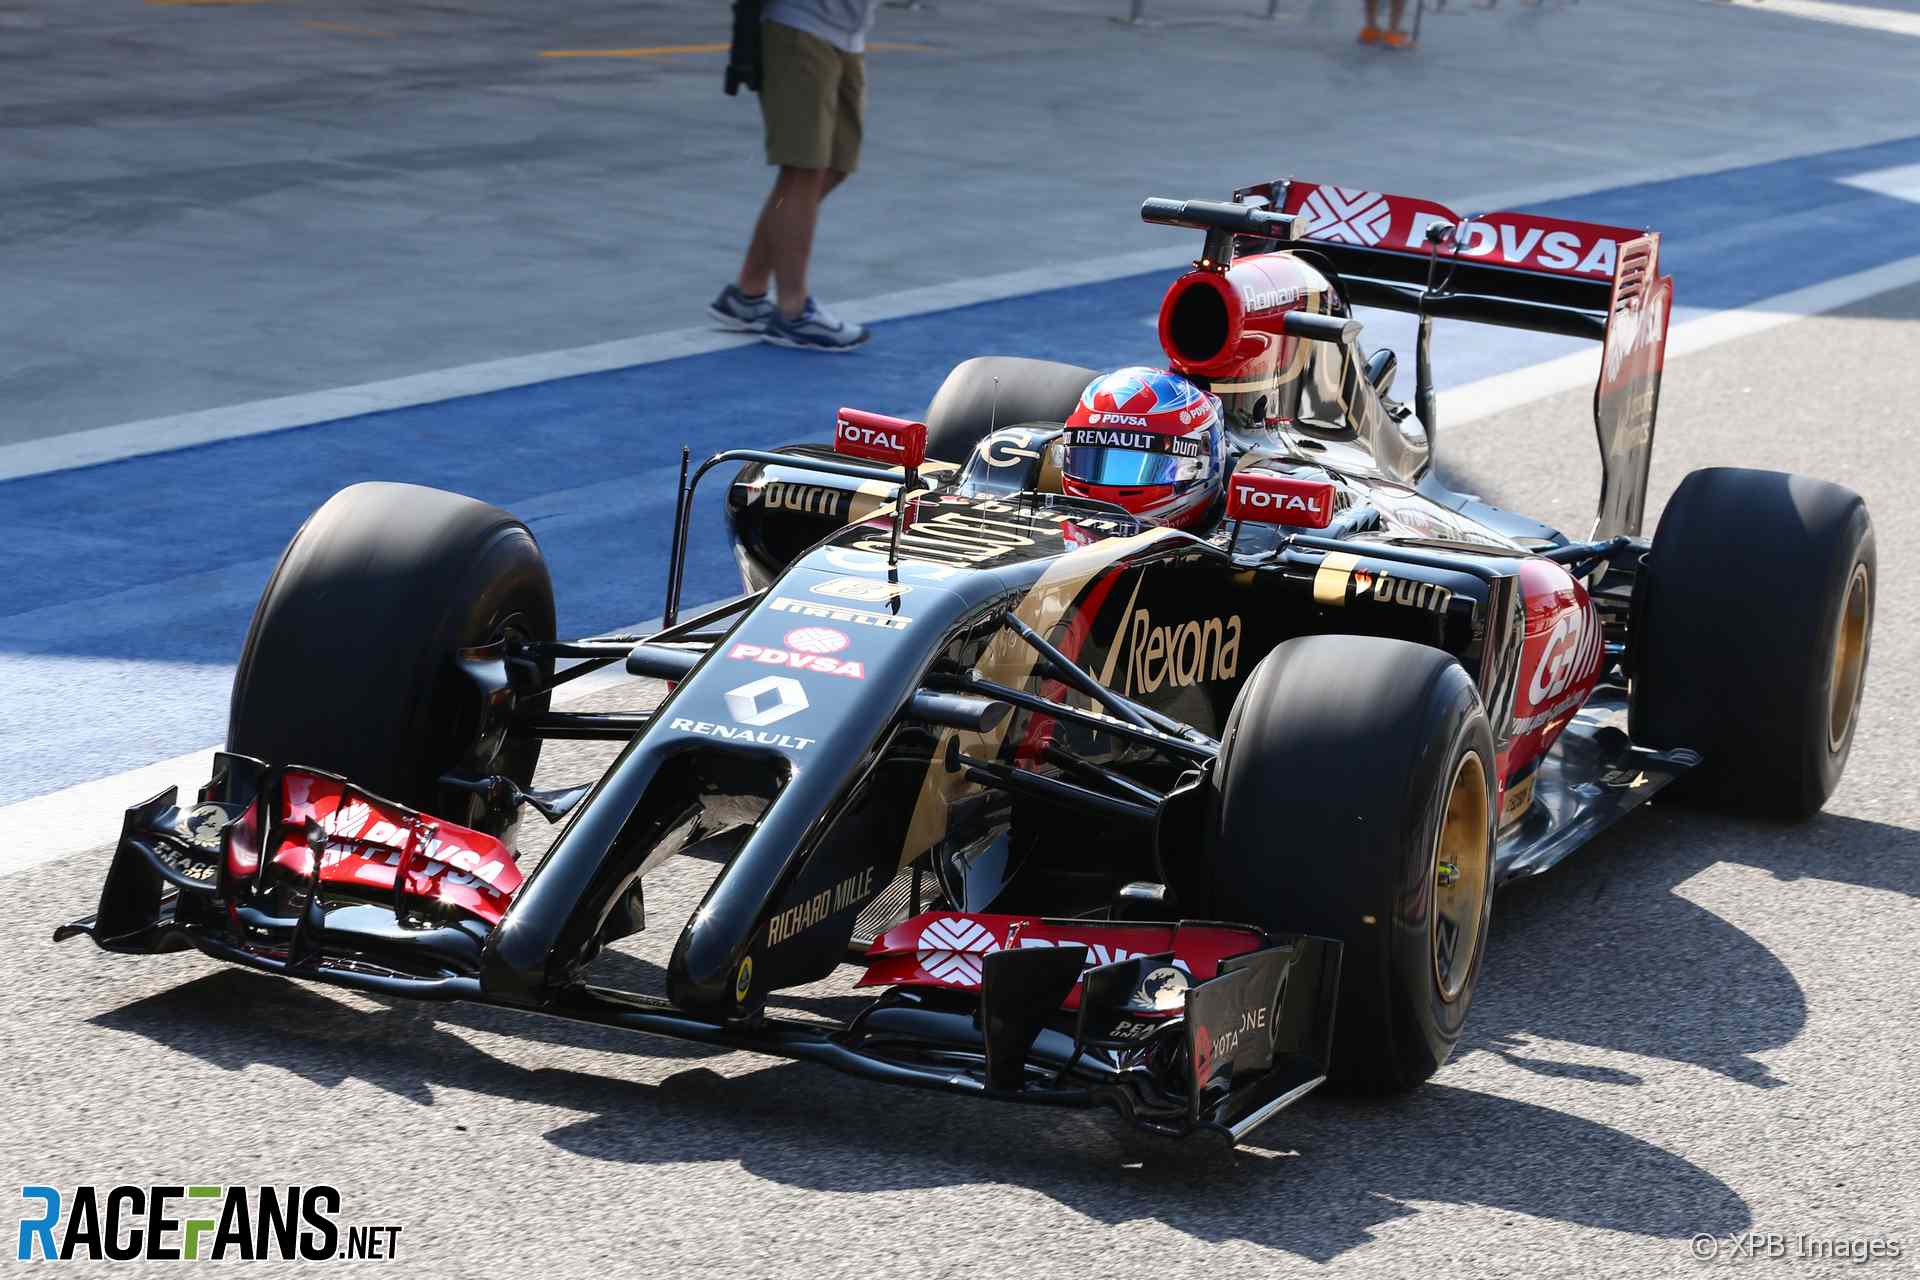 Romain Grosjean, Lotus E22, Bahrain International Circuit, 2014